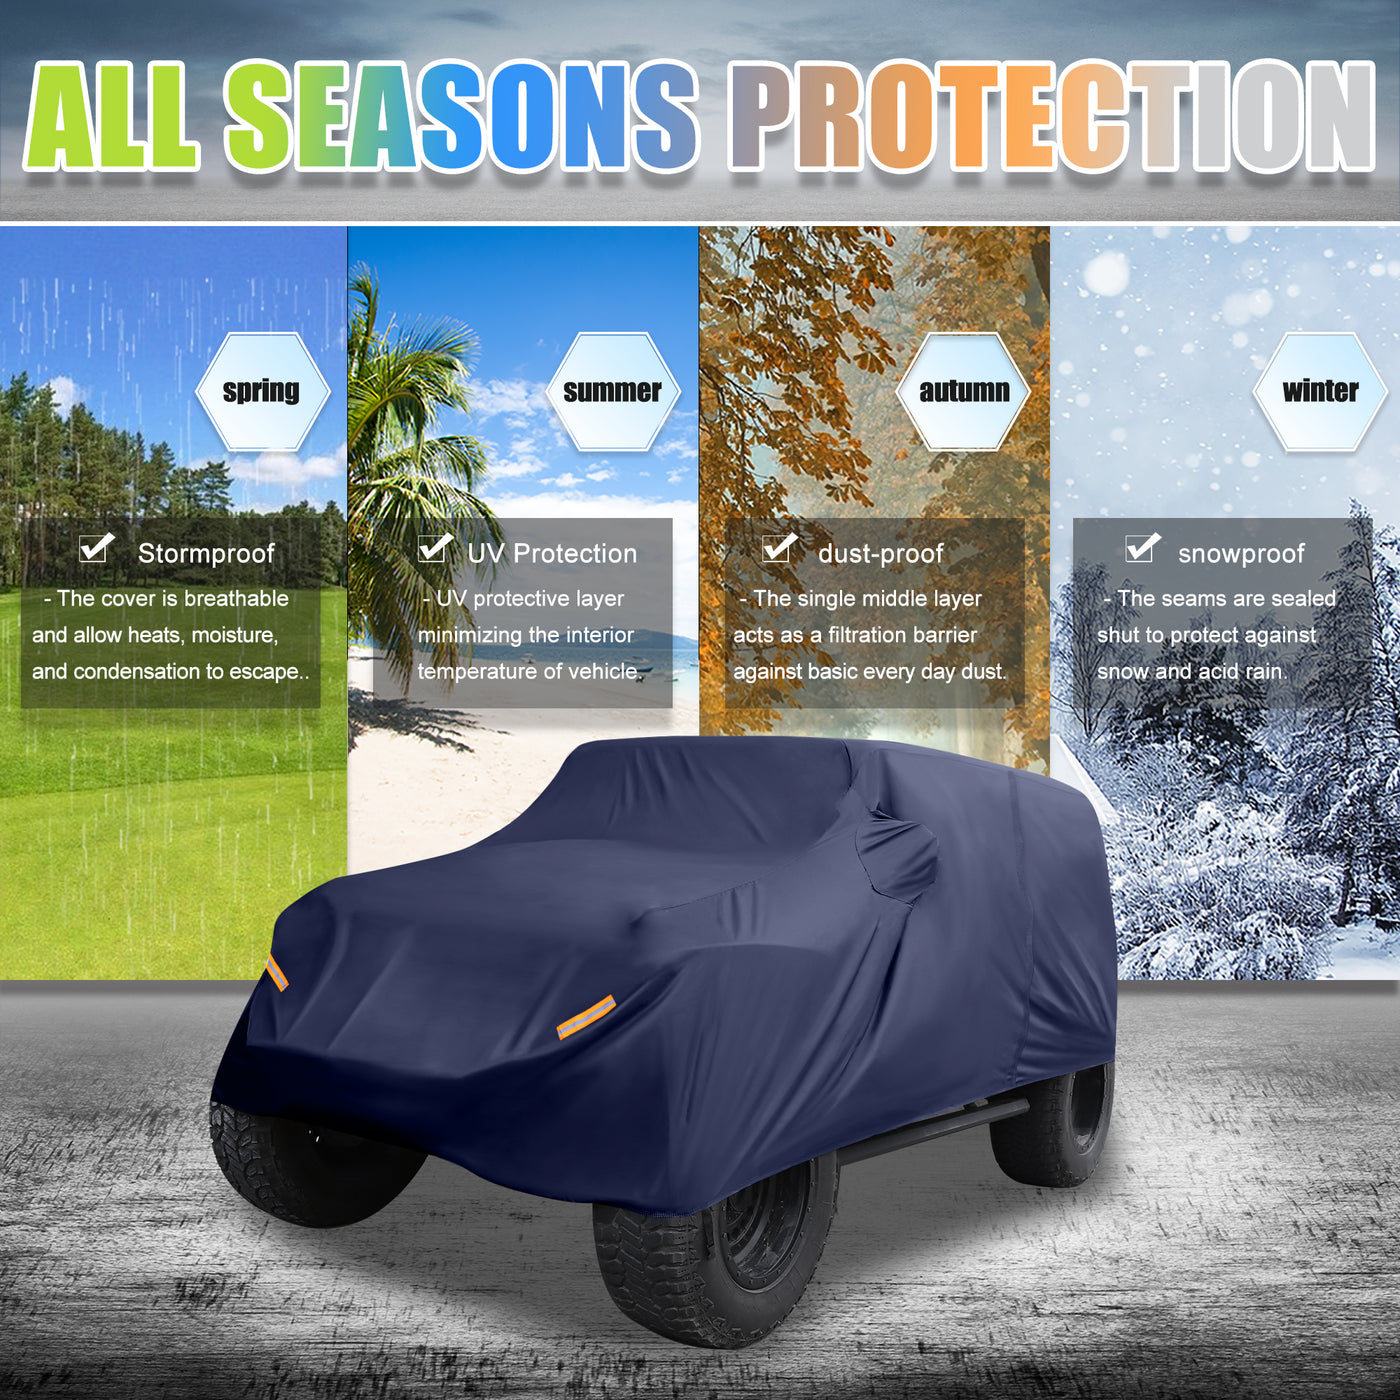 X AUTOHAUX SUV Car Cover Fit for Jeep Wrangler JK JL 2 Door 2007-2021 Outdoor Waterproof Sun Rain Dust Wind Snow Protection 210D Oxford